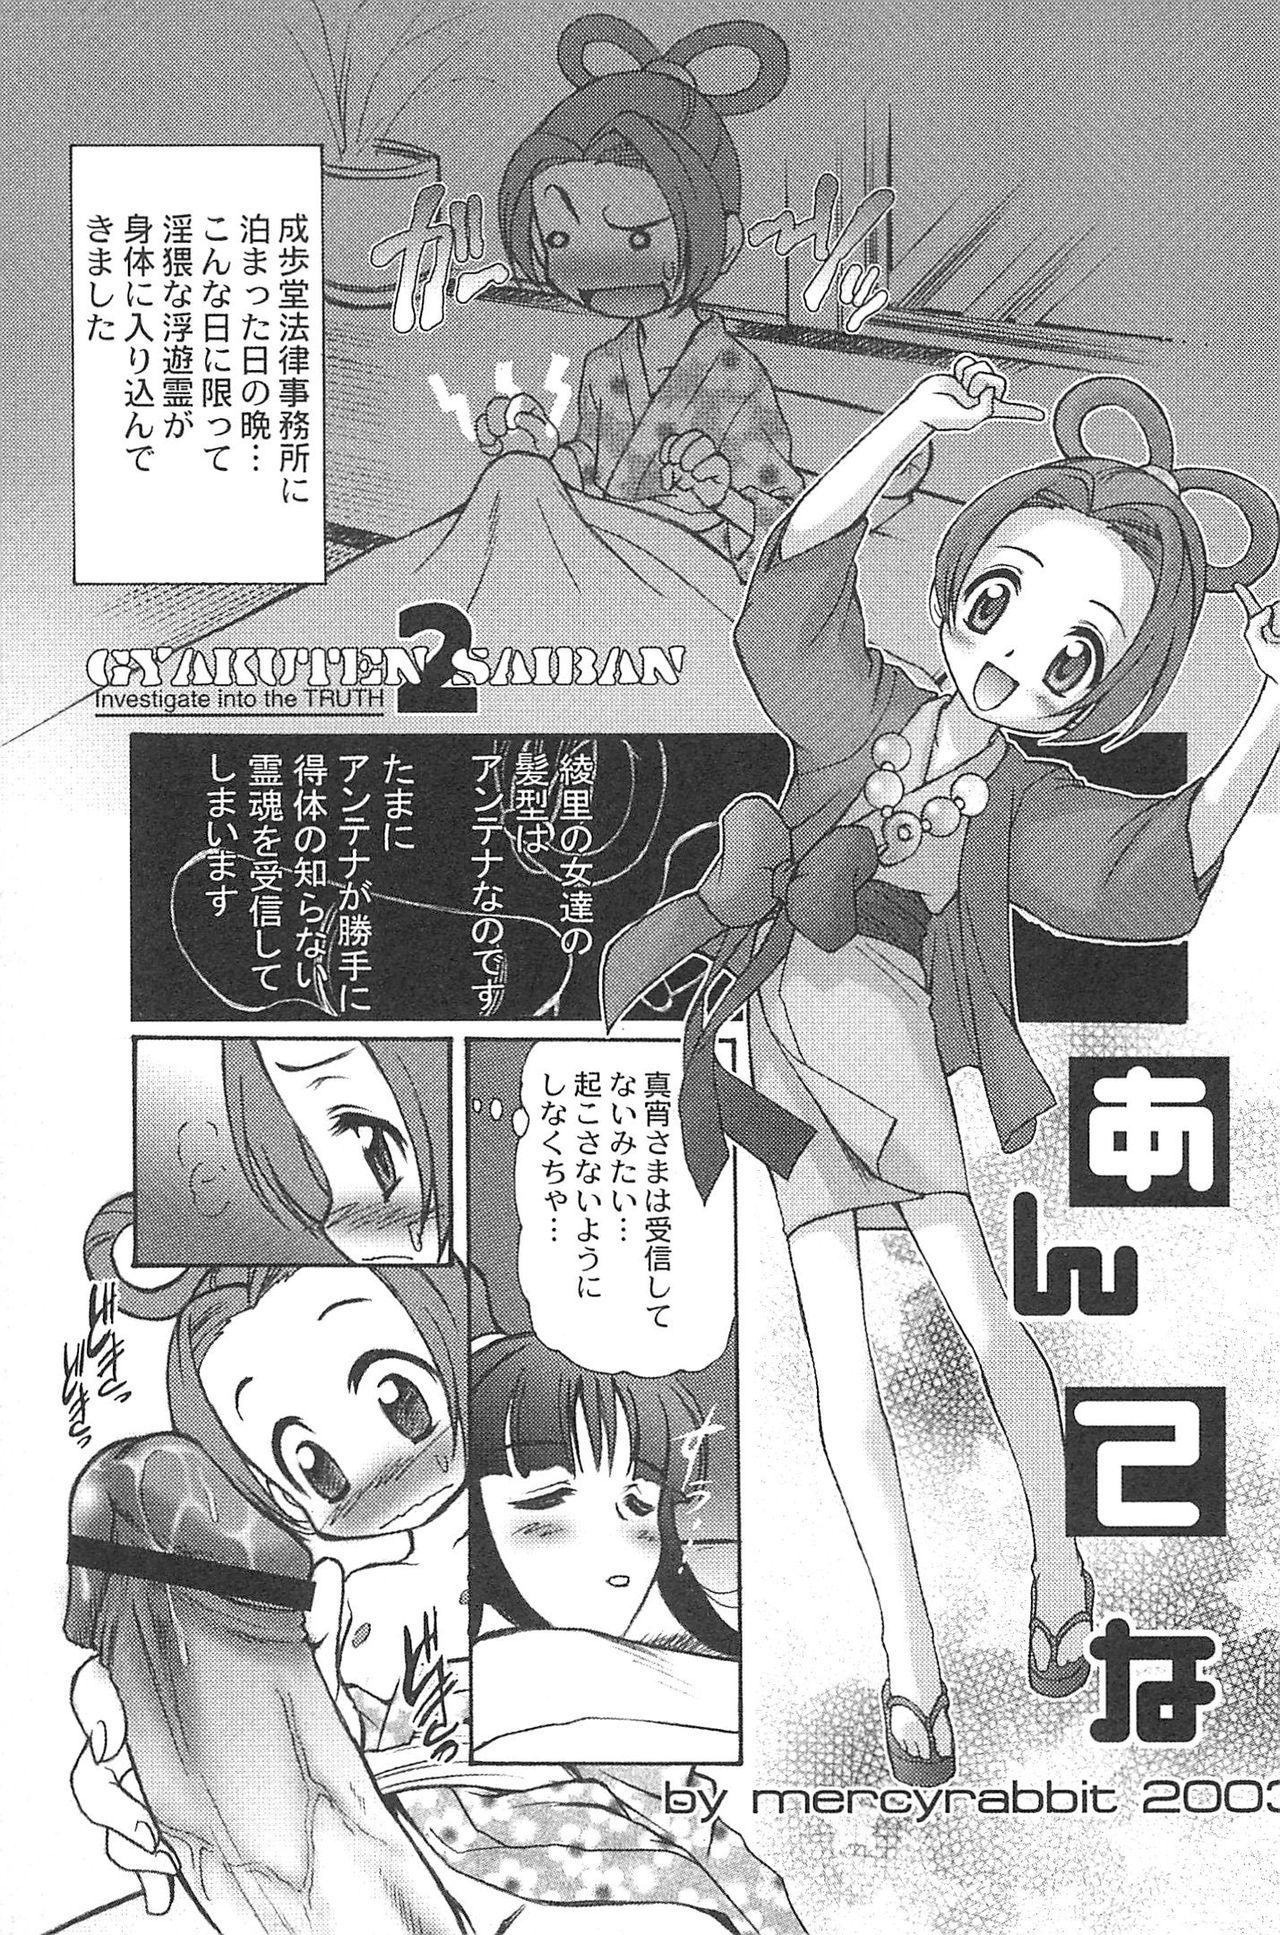 Ariake International X-rated Manga Festival Mercy Rabbit SPECIAL 113